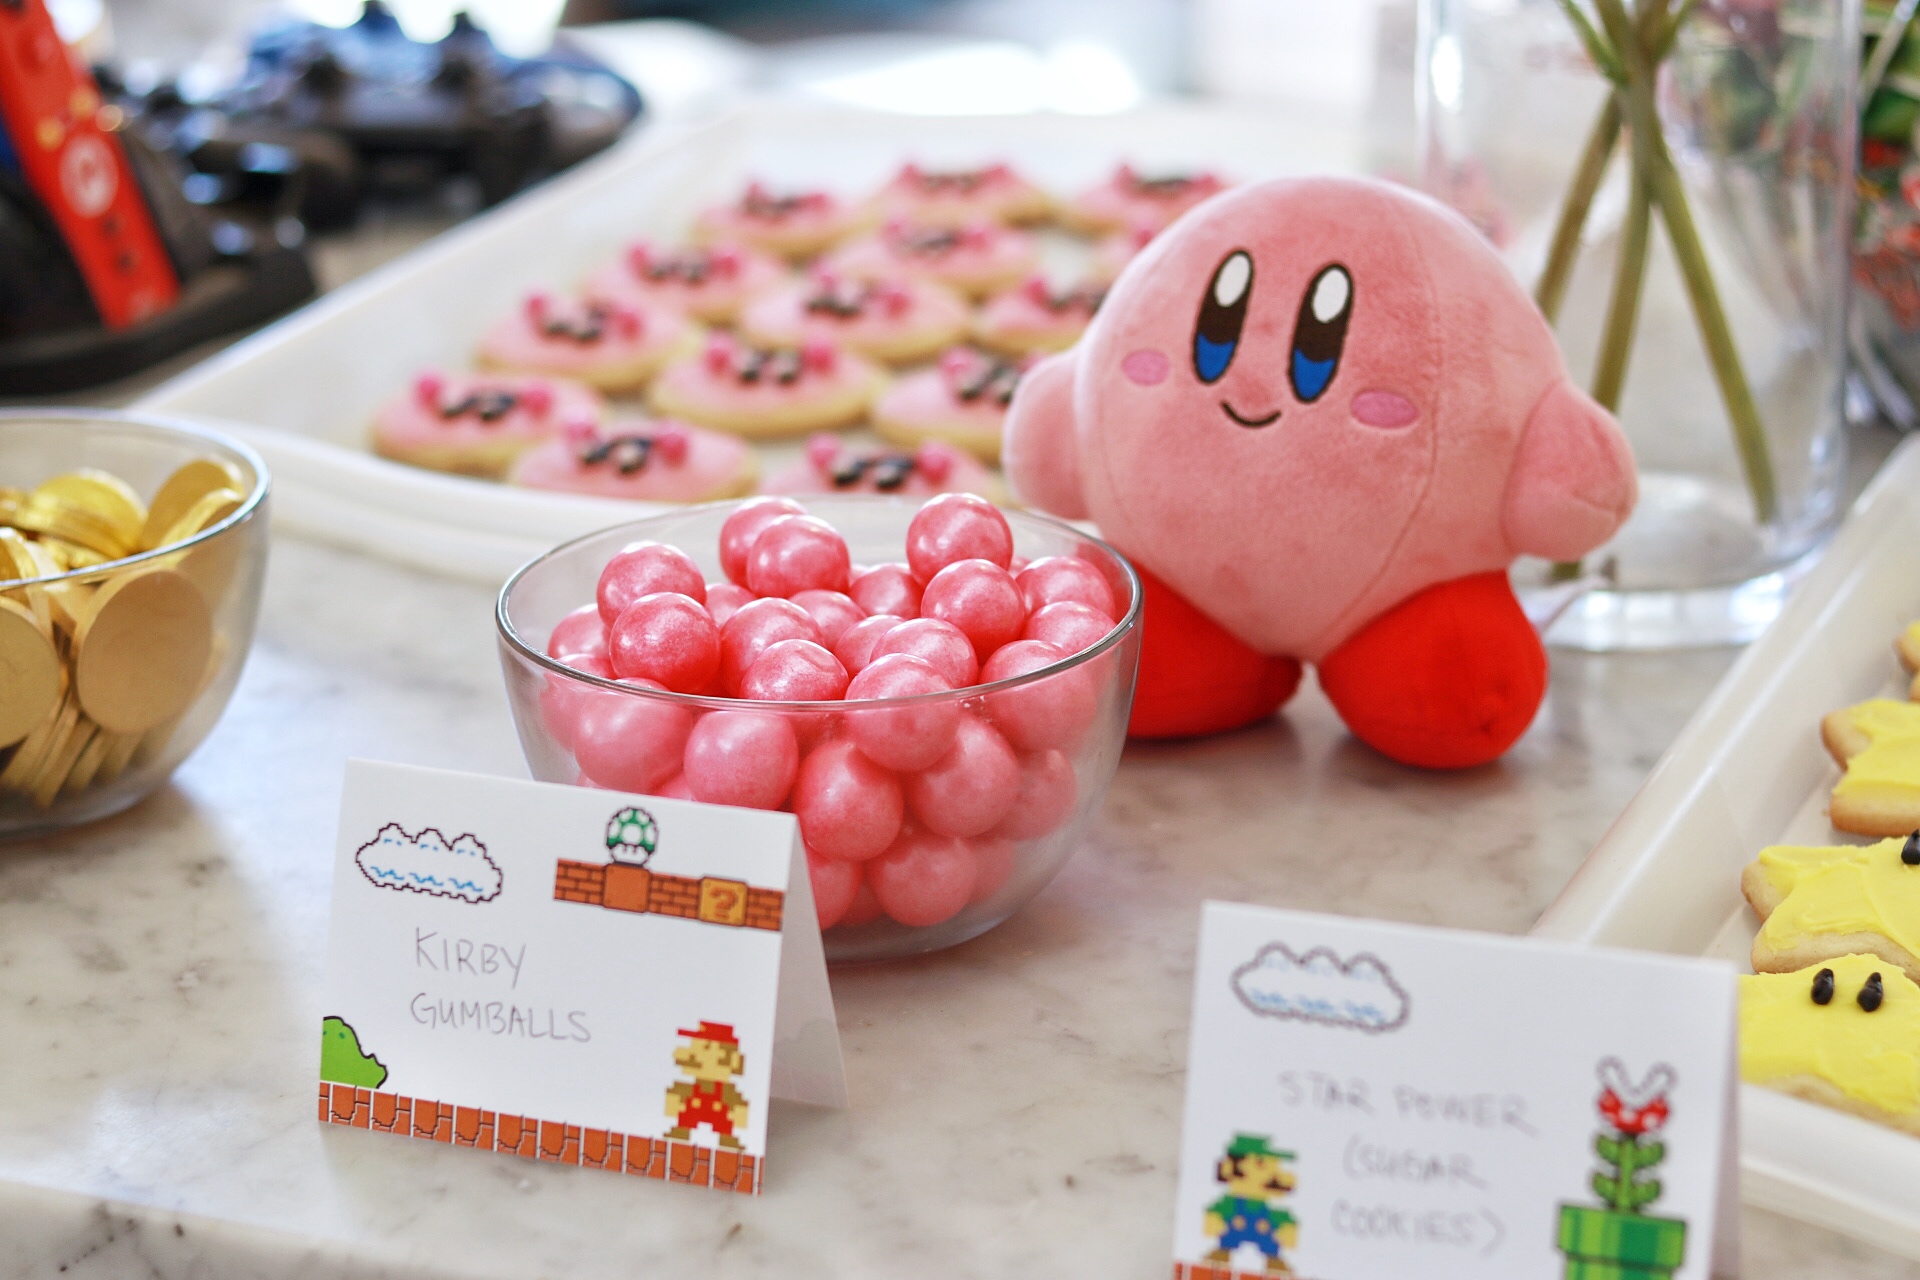 Treat ideas for a Kirby birthday party